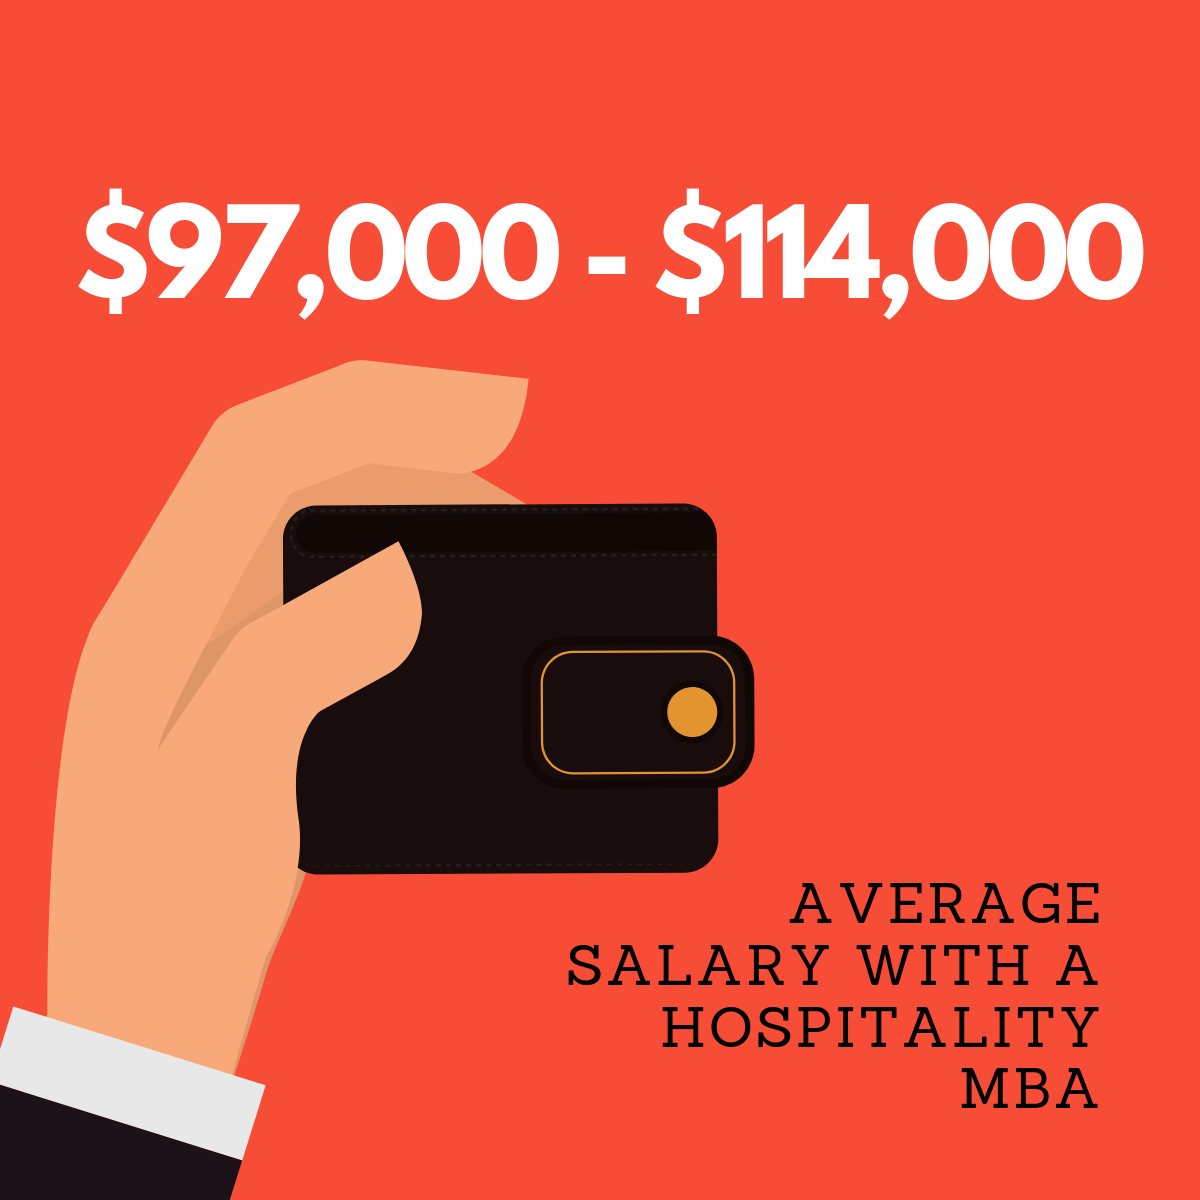 $97,000 - $114,000 average salary with a hospitality MBA